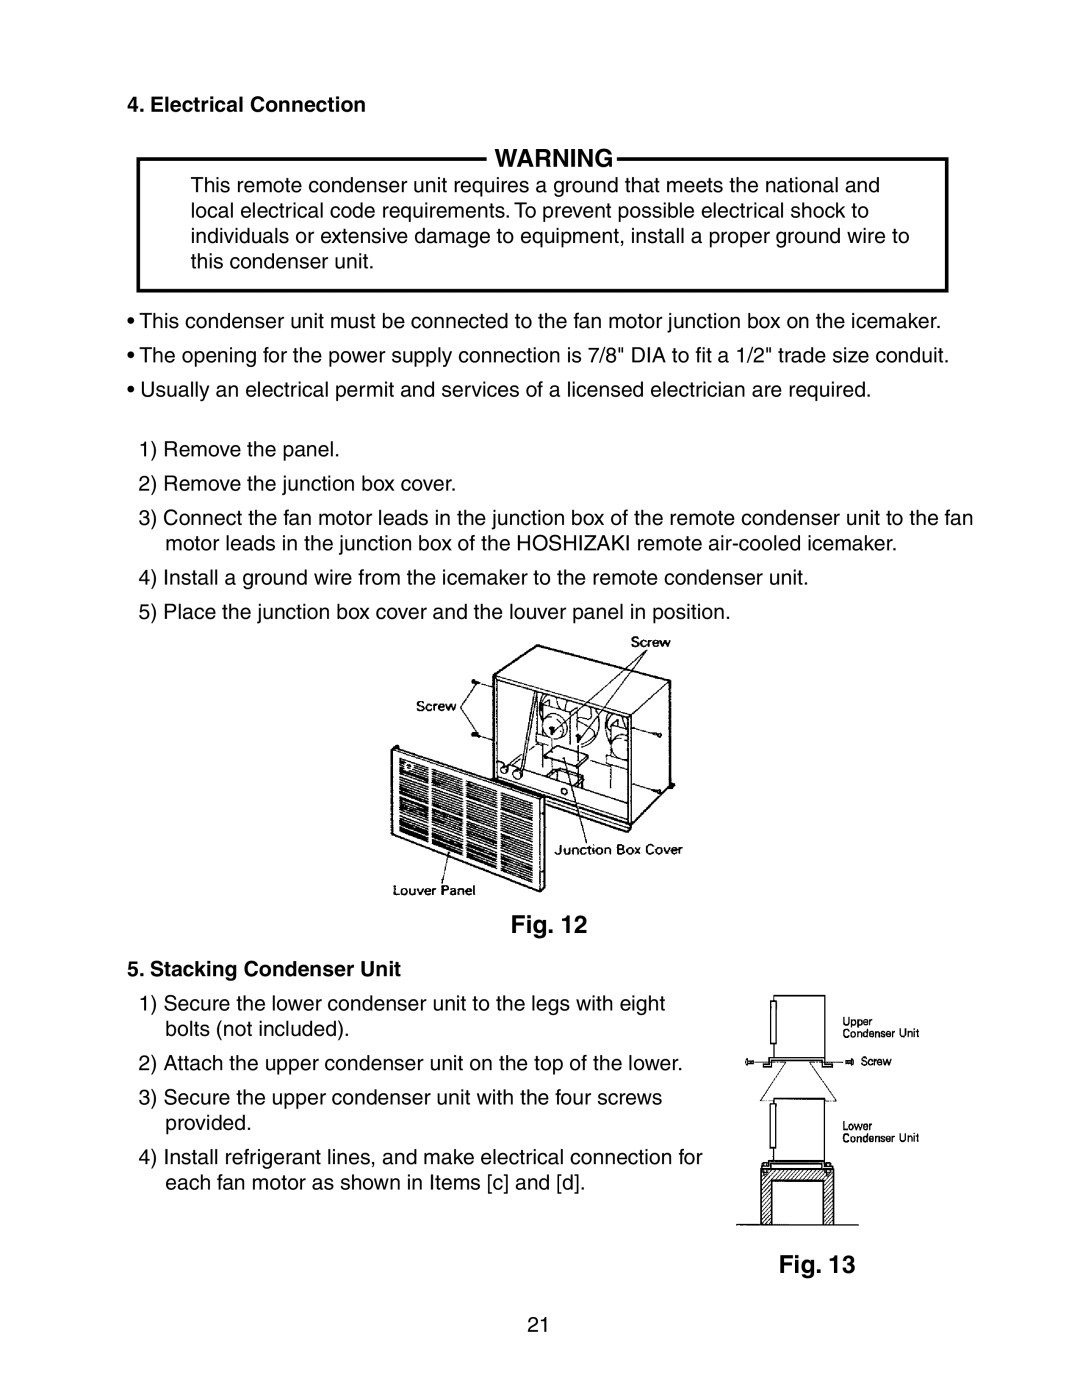 Hoshizaki KM-1800SRH/3, KM-1800SWH/3, KM-1800SAH/3 instruction manual Electrical Connection, Stacking Condenser Unit 